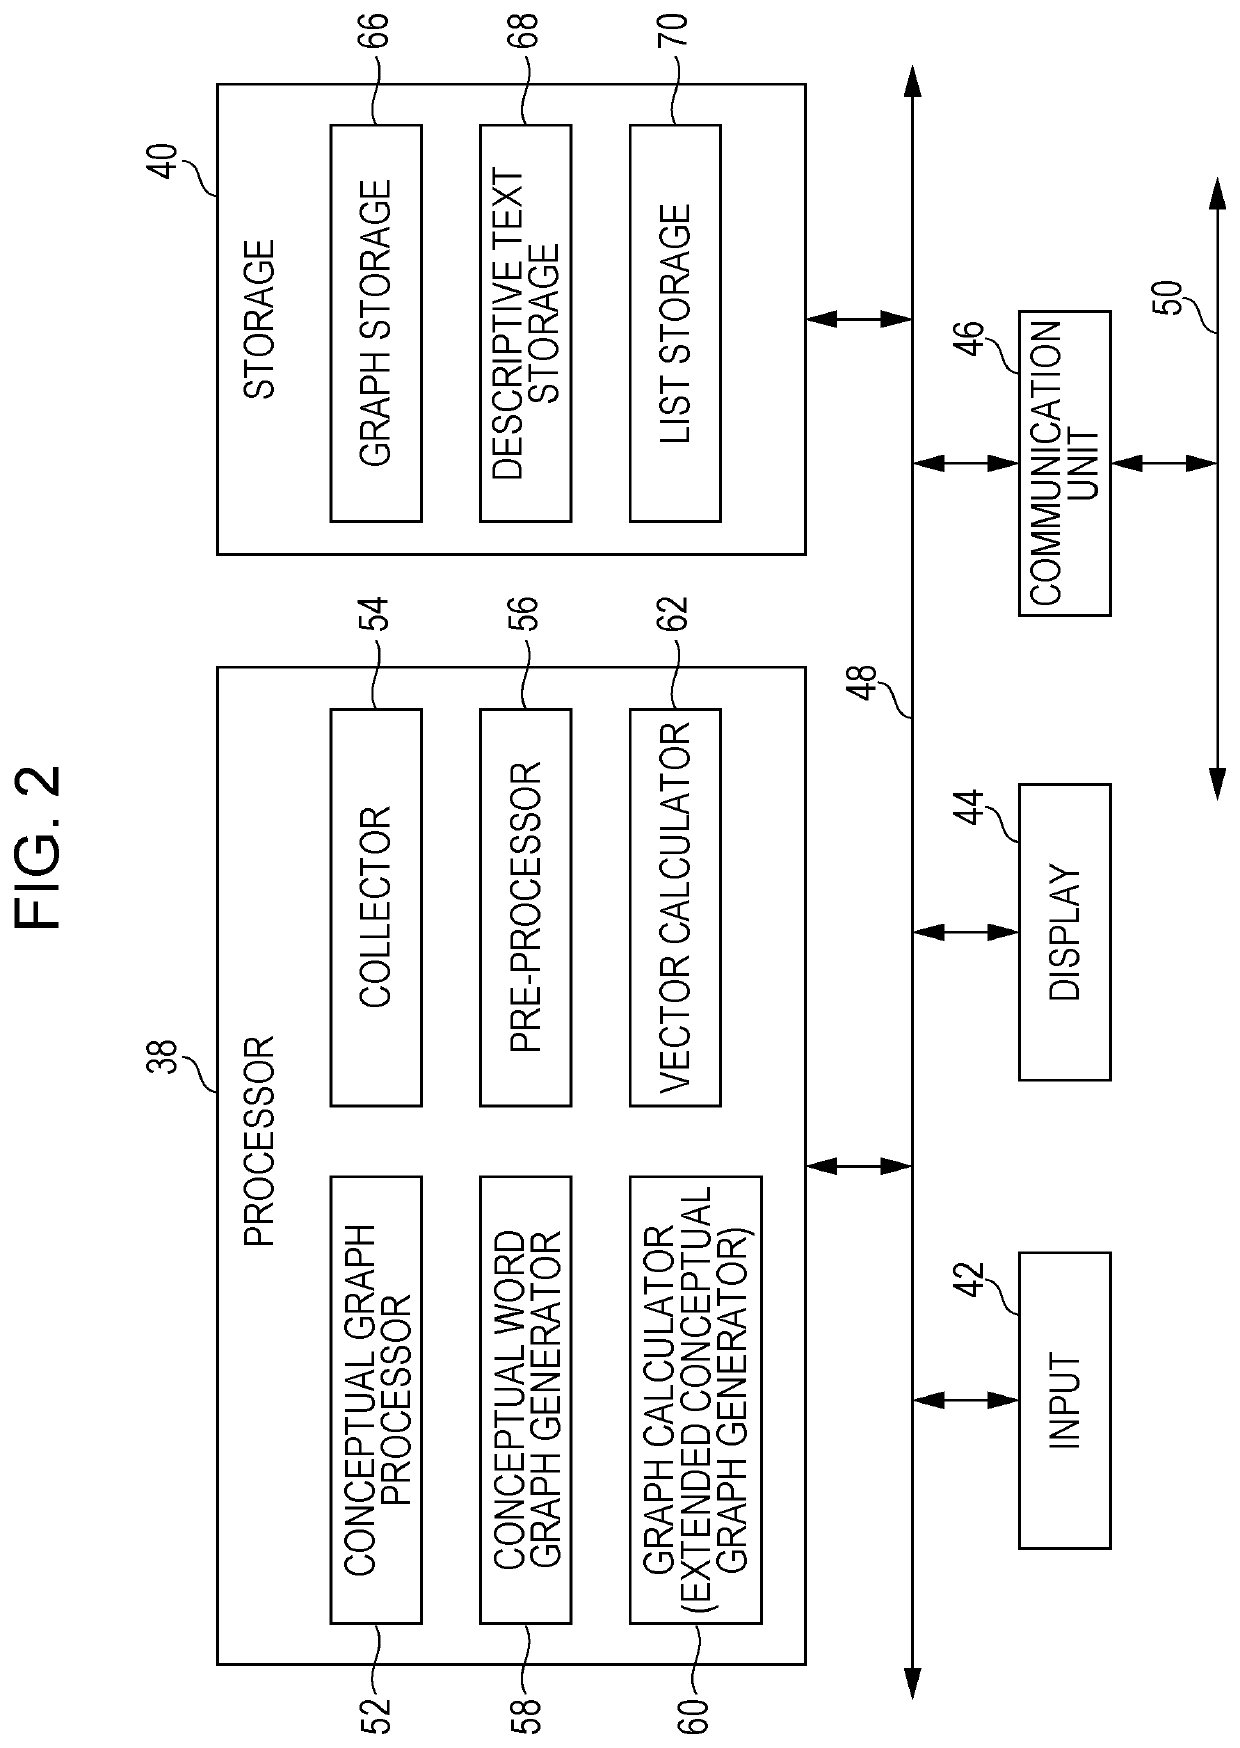 Conceptual graph processing apparatus and non-transitory computer readable medium